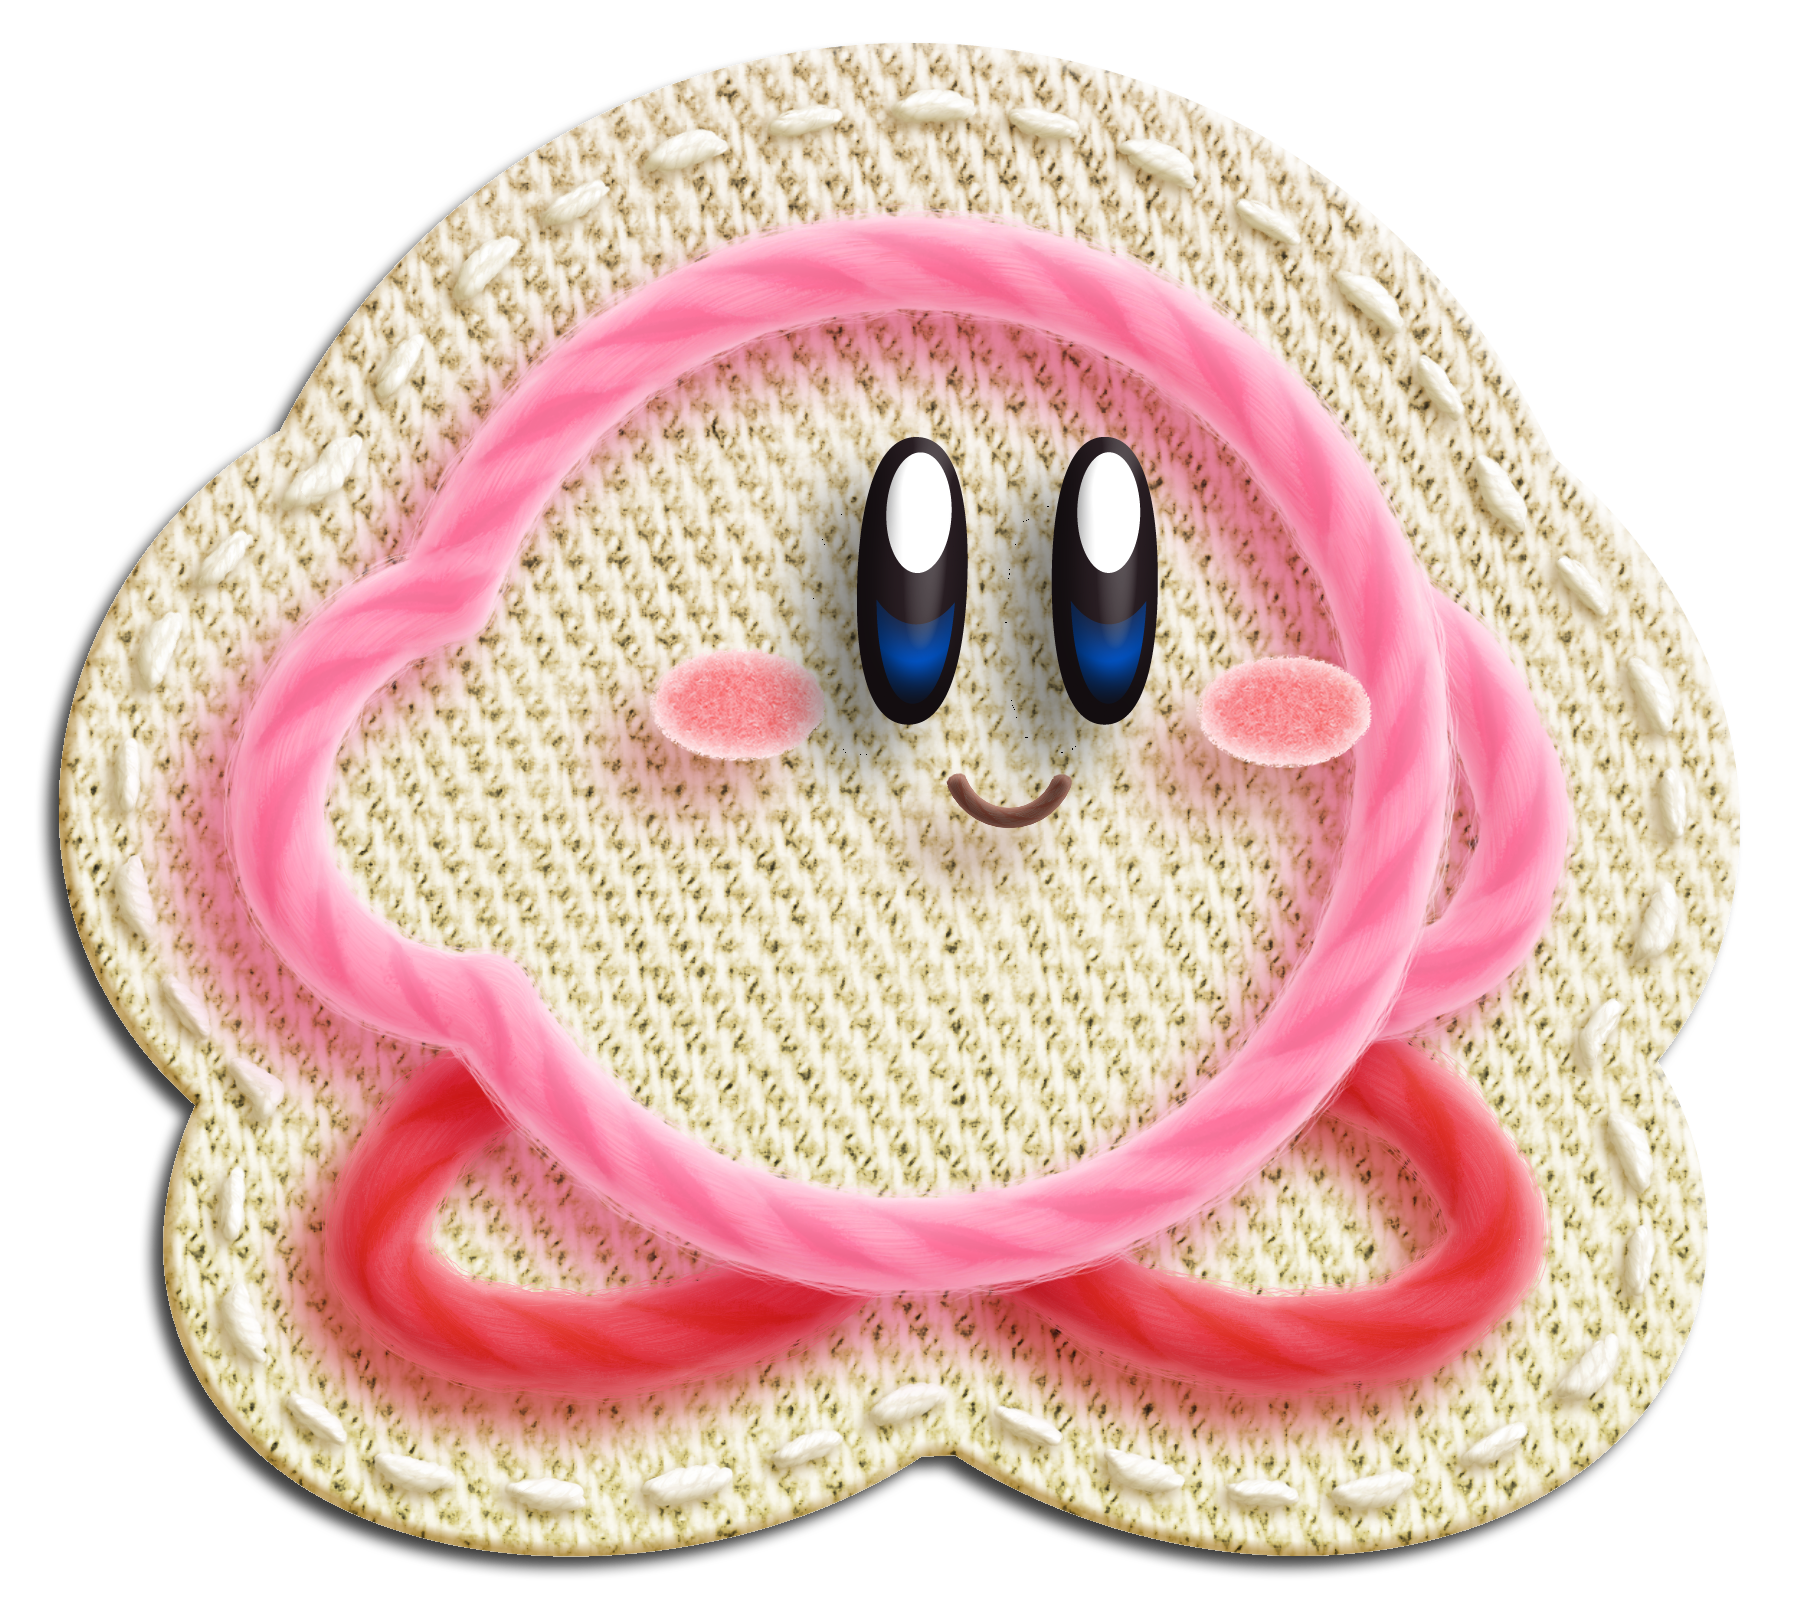 Kirby's Epic Yarn: A Warm & Innovative World of Yarn